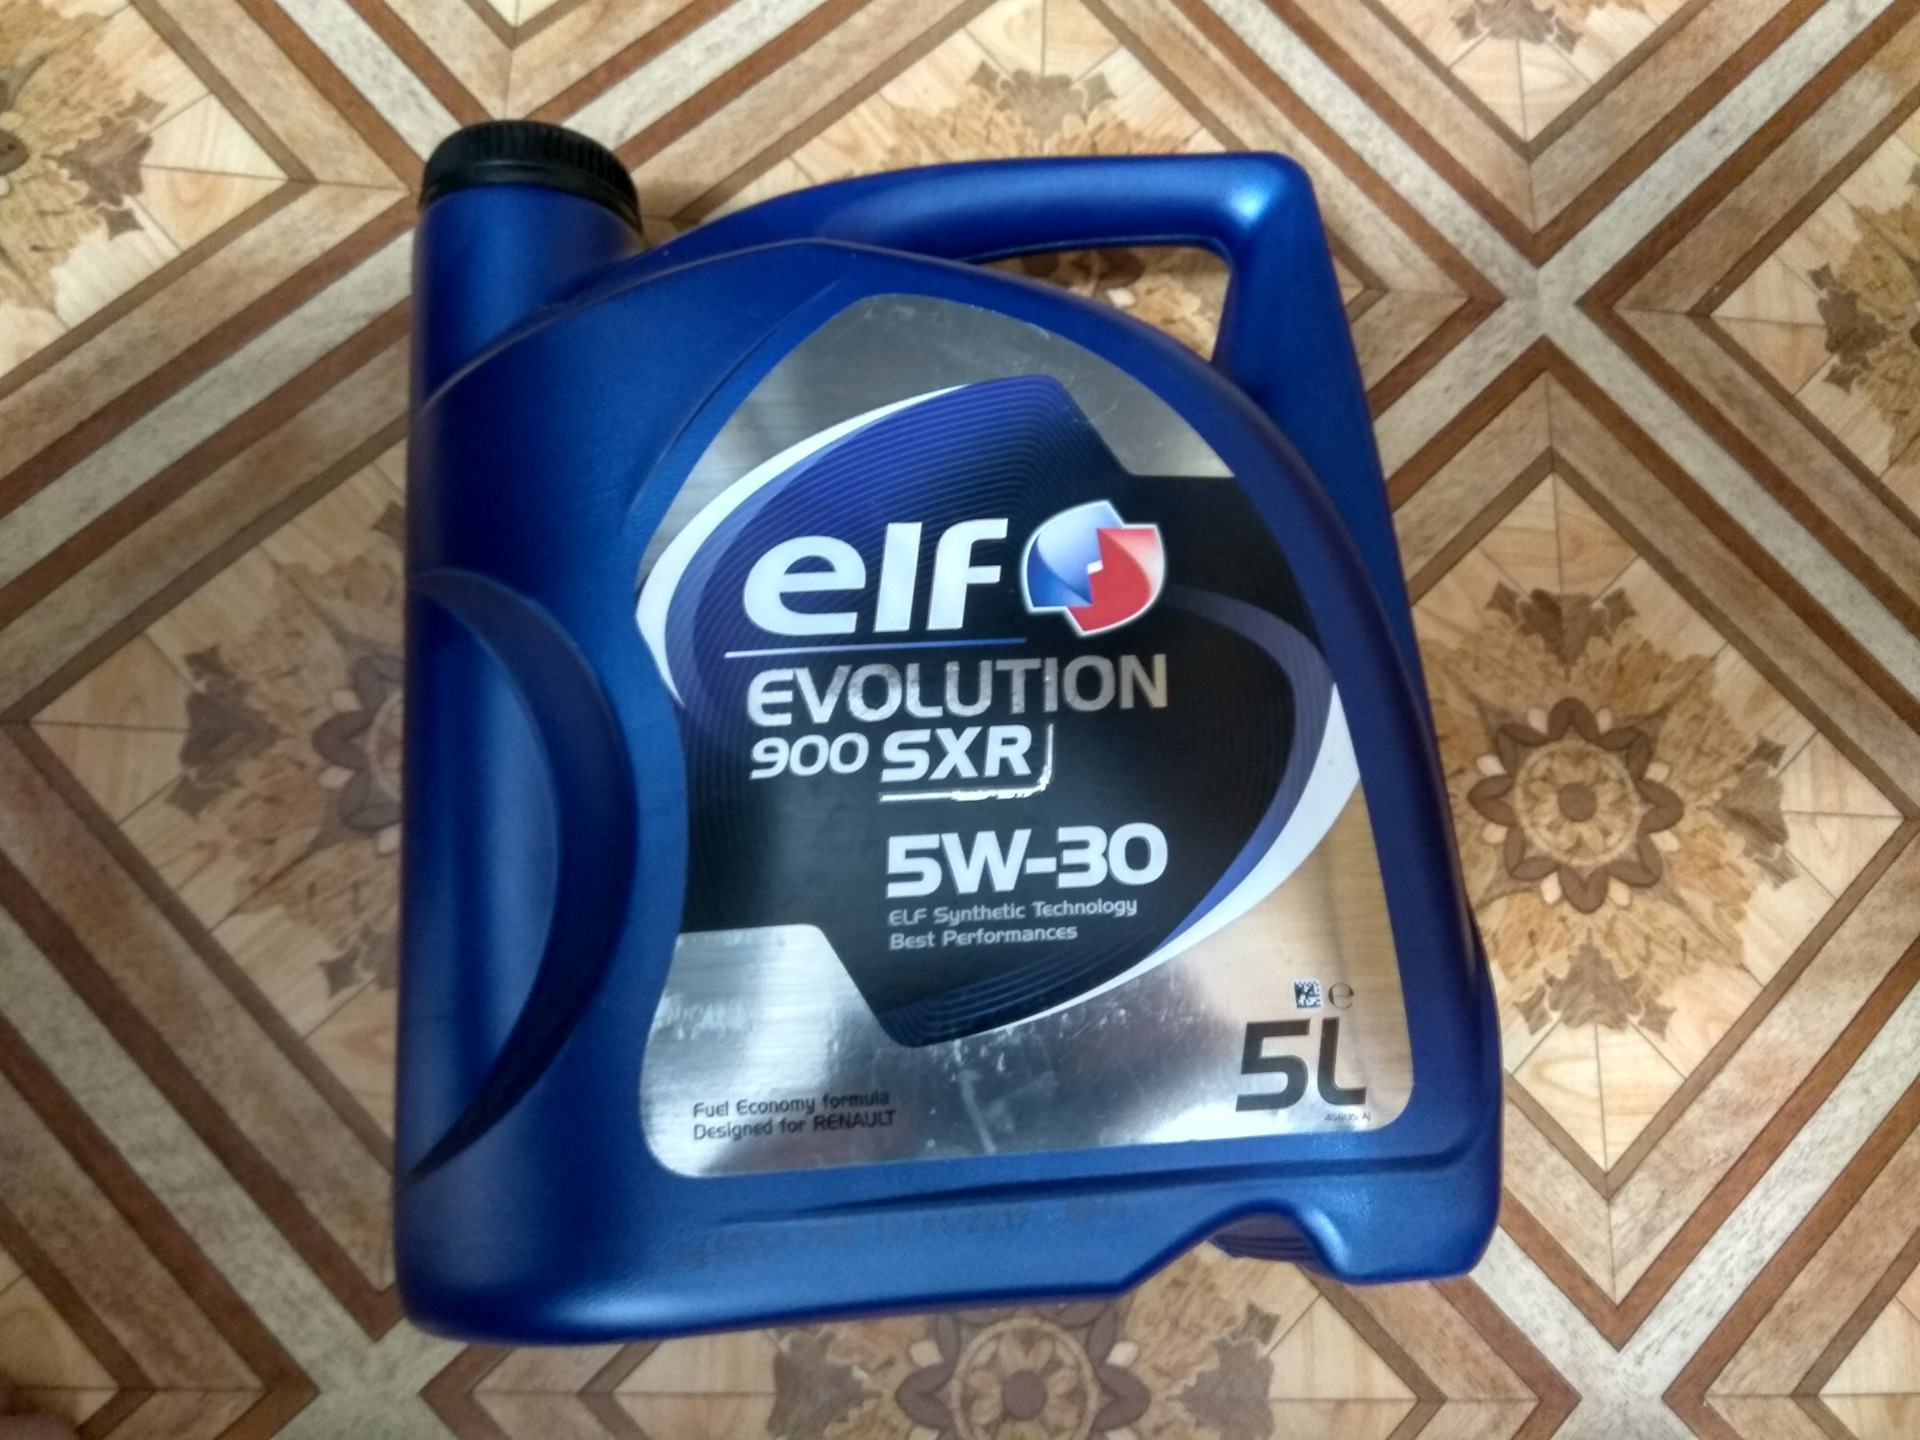 Моторное масло elf sxr 5w40. Evolution 900 SXR 5w-30. Elf Evolution 900 SXR 5w30. Elf Evolution 900 SRX 5w30 4l. Elf Evolution 900 SXR 5w-30 5л.